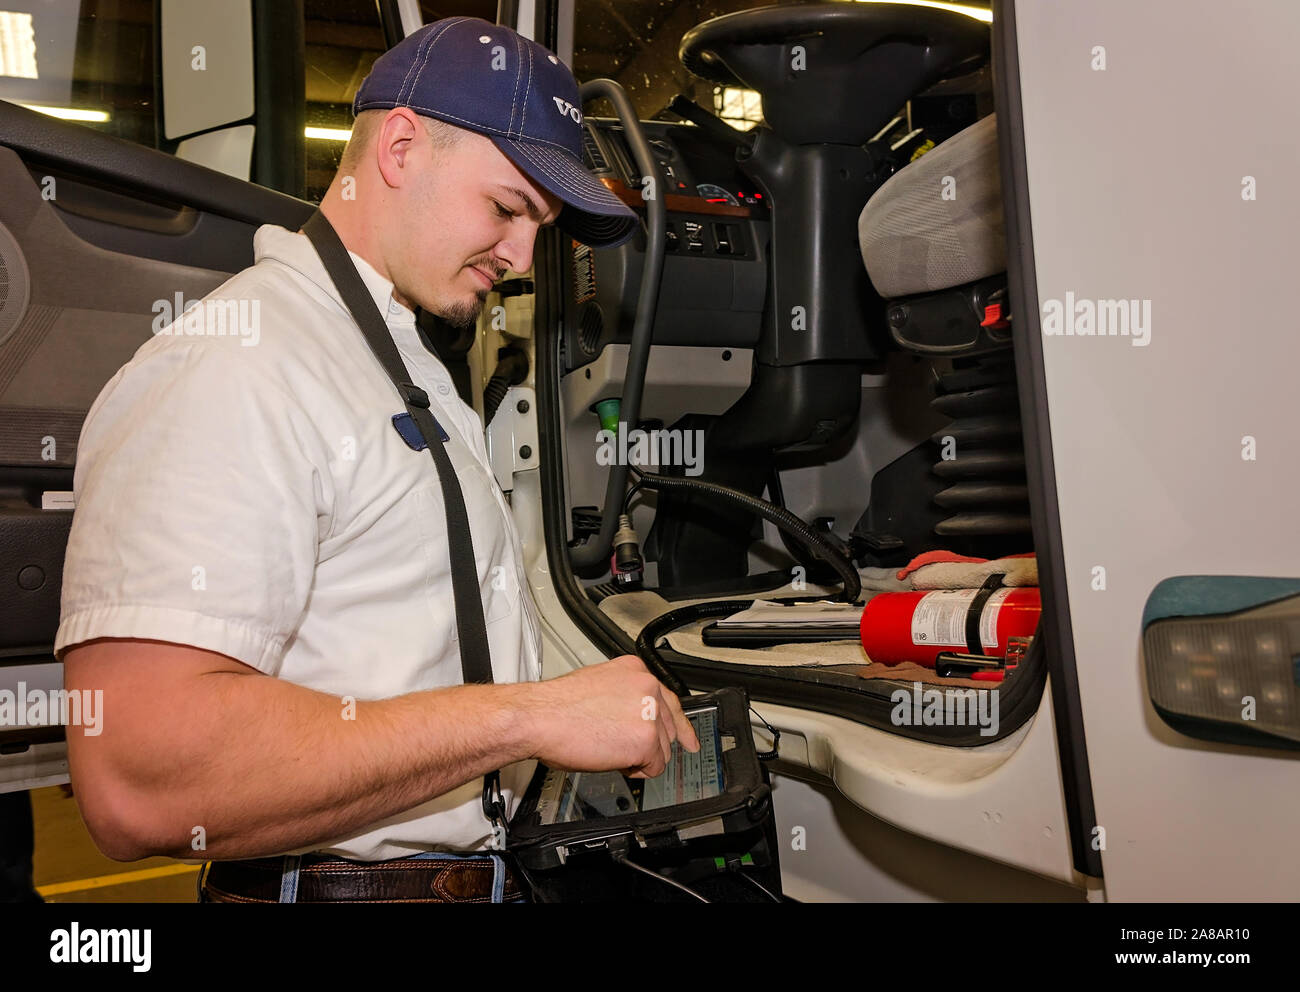 A Volvo service manager checks diagnostics on a customer’s Volvo, Nov. 15, 2017, at Bruckner Truck Sales in Farmington, New Mexico. Stock Photo